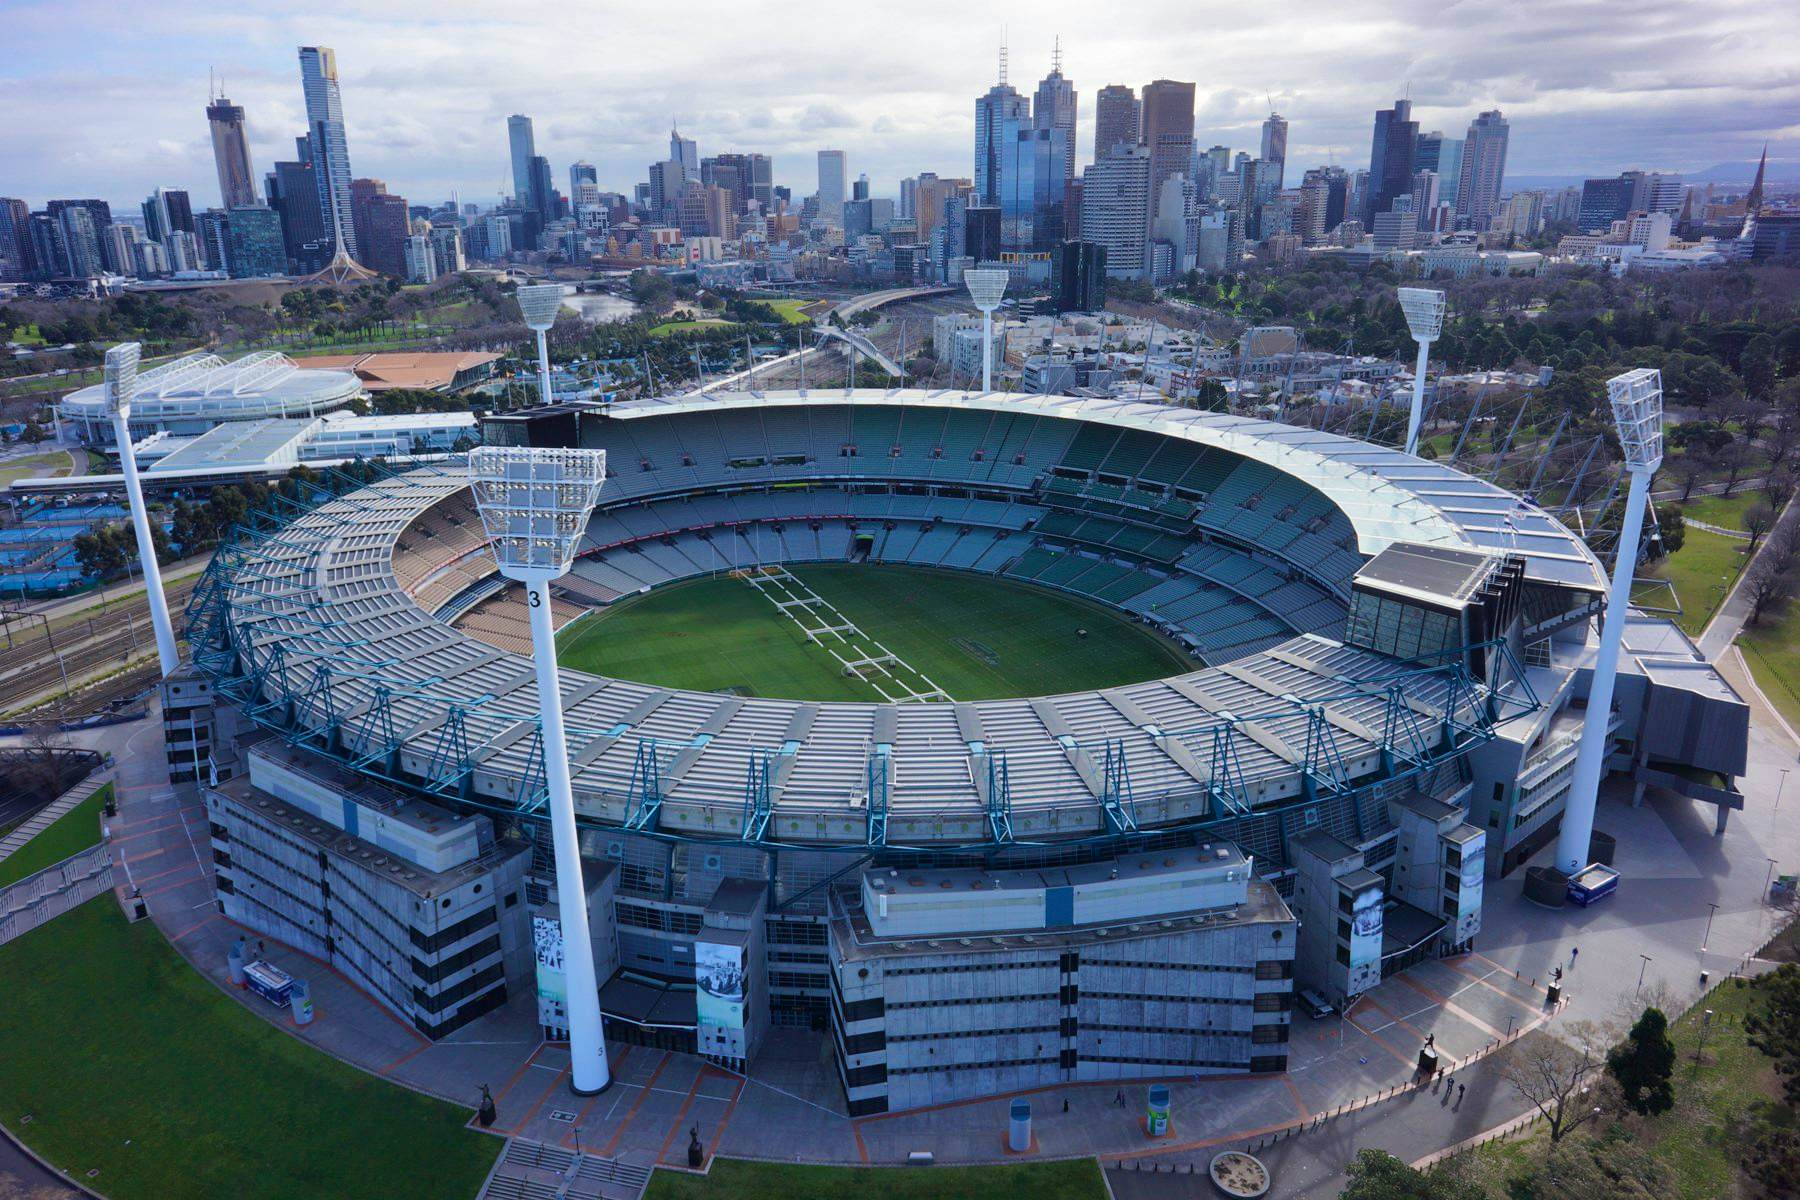 Melbourne cricket ground tour - Admissions